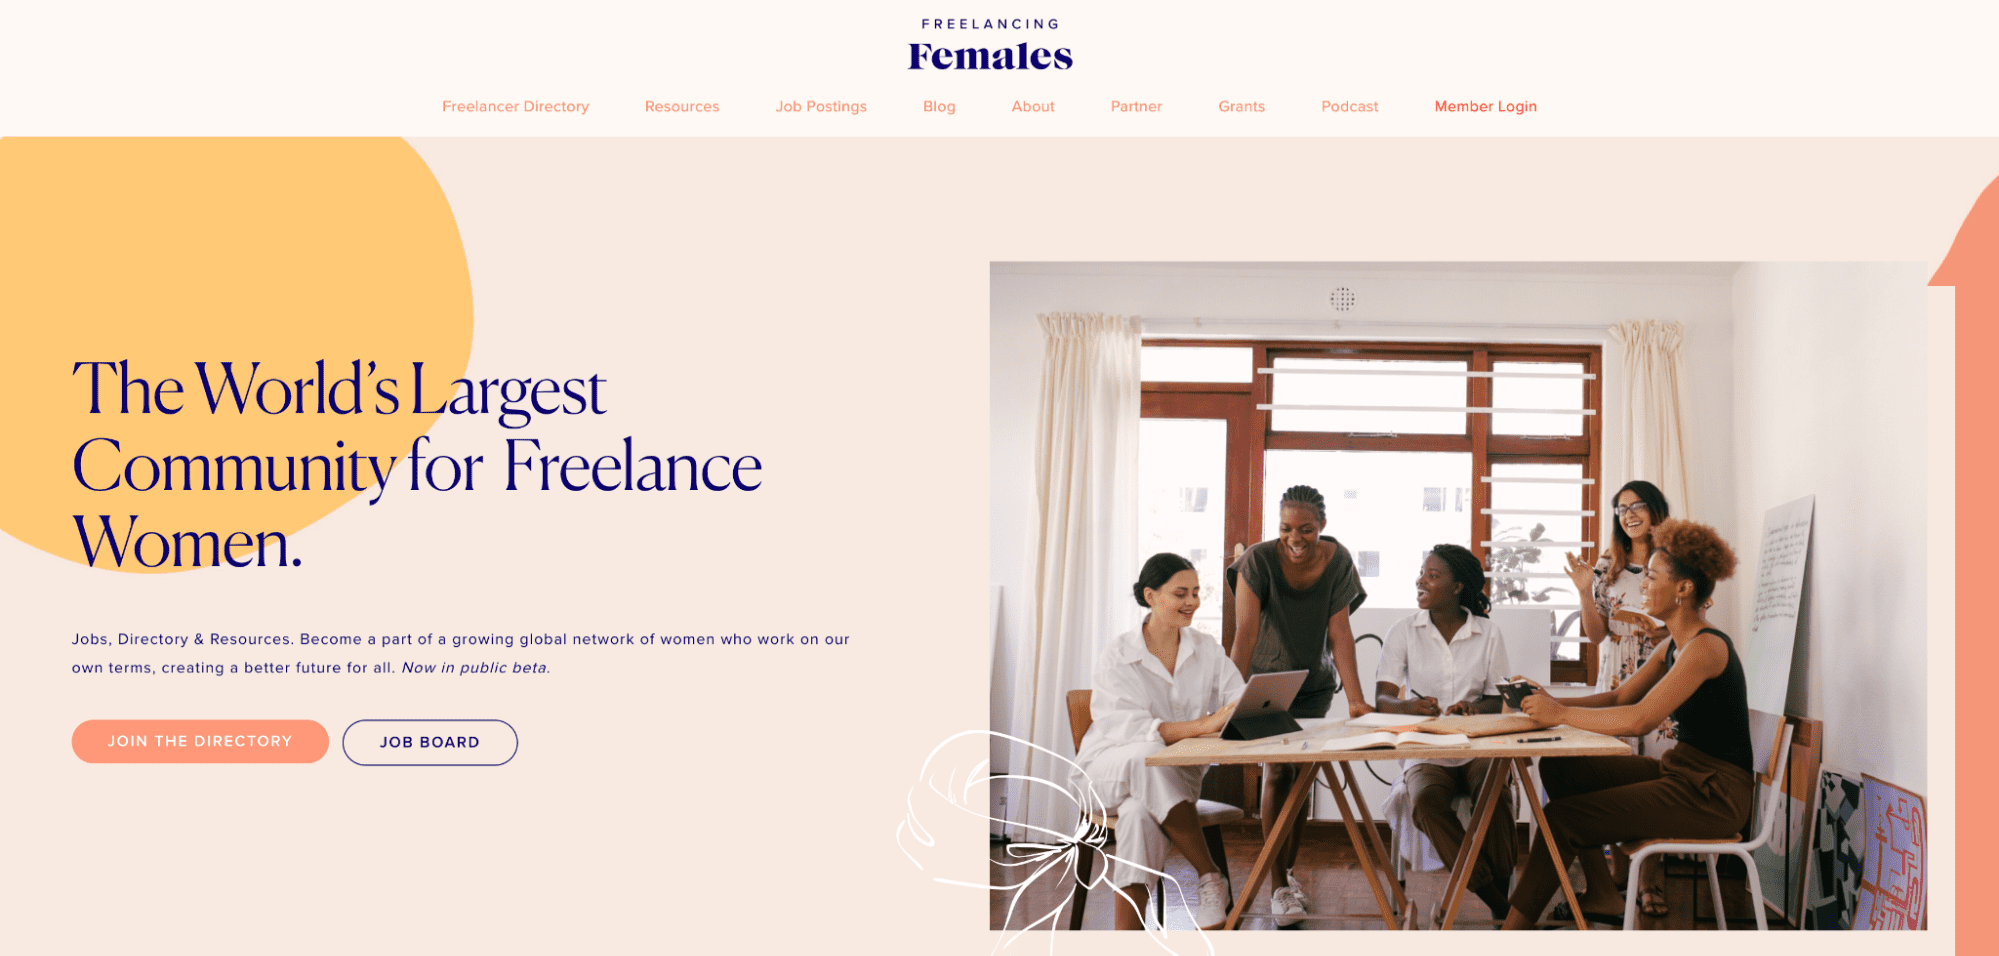 best freelance websites - freelancing females